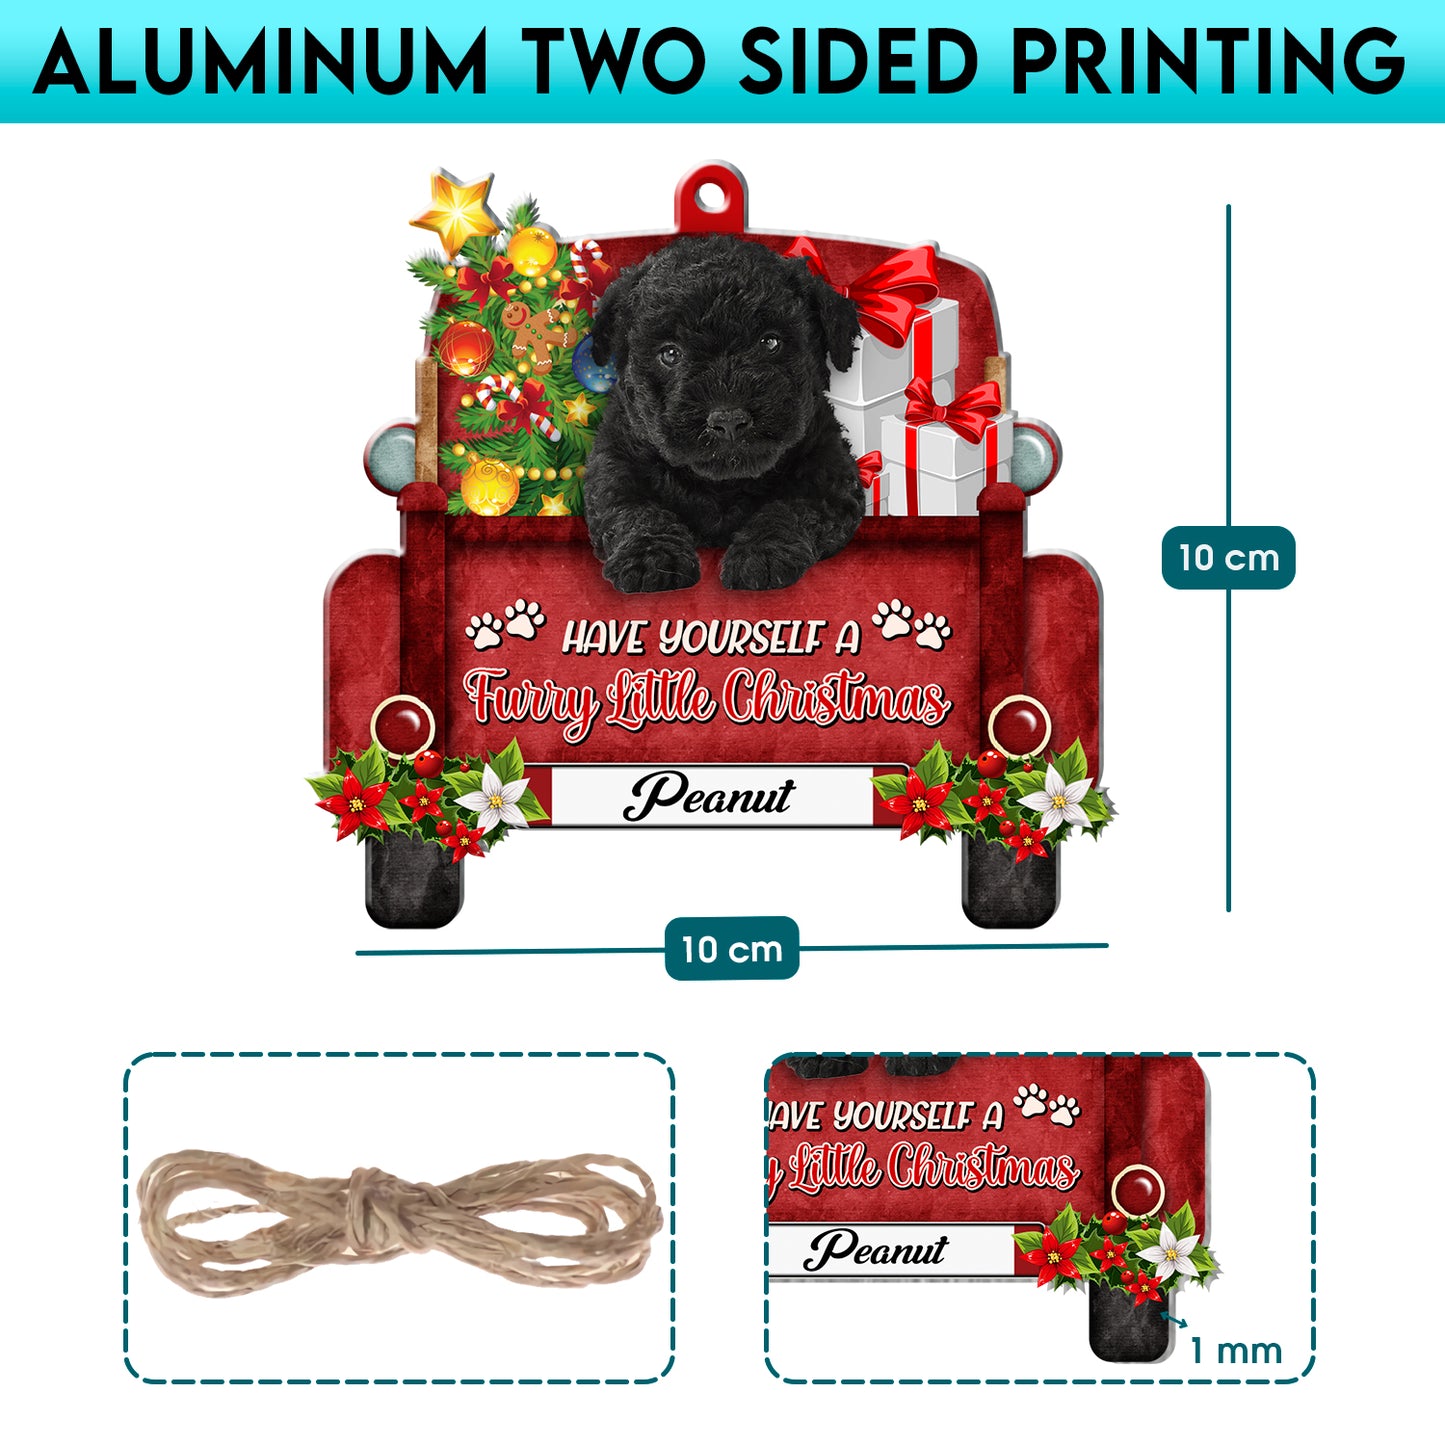 Personalized Black Puli Red Truck Christmas Aluminum Ornament